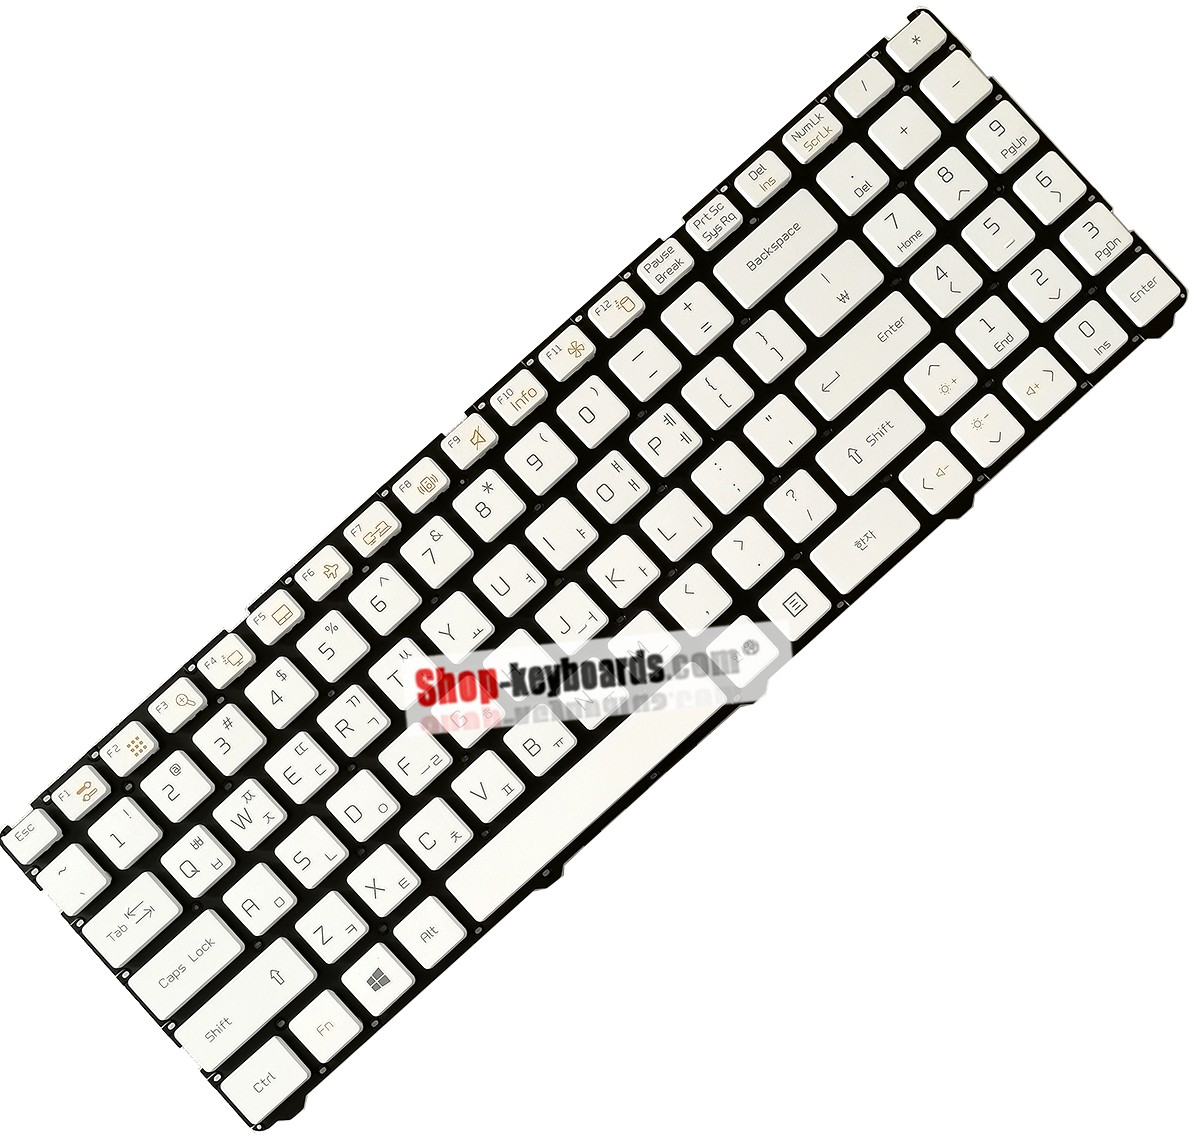 LG MP-12K73E0-9208 Keyboard replacement